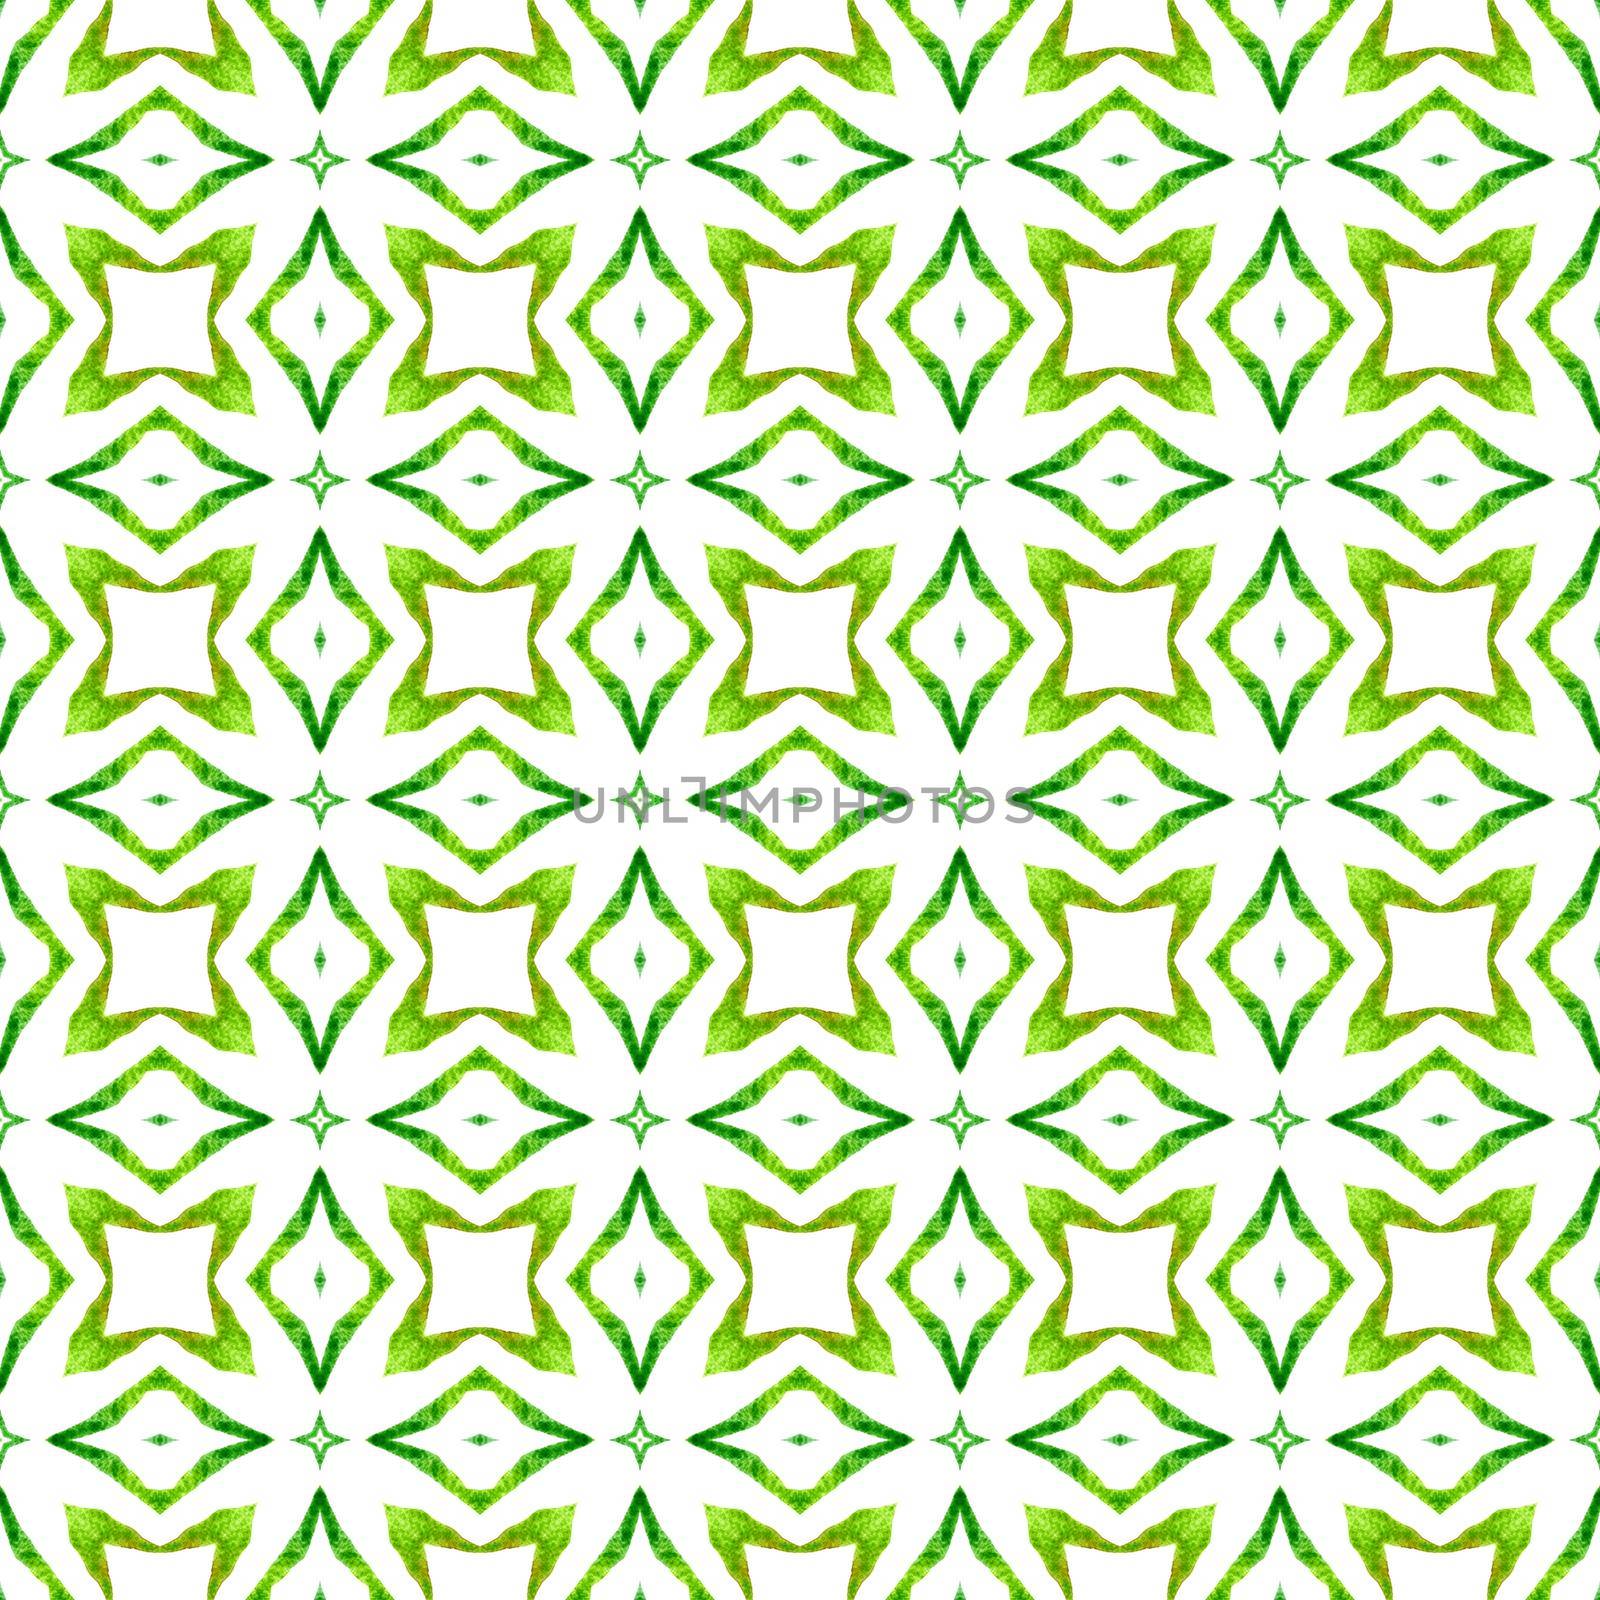 Textile ready dramatic print, swimwear fabric, wallpaper, wrapping. Green unequaled boho chic summer design. Organic tile. Trendy organic green border.